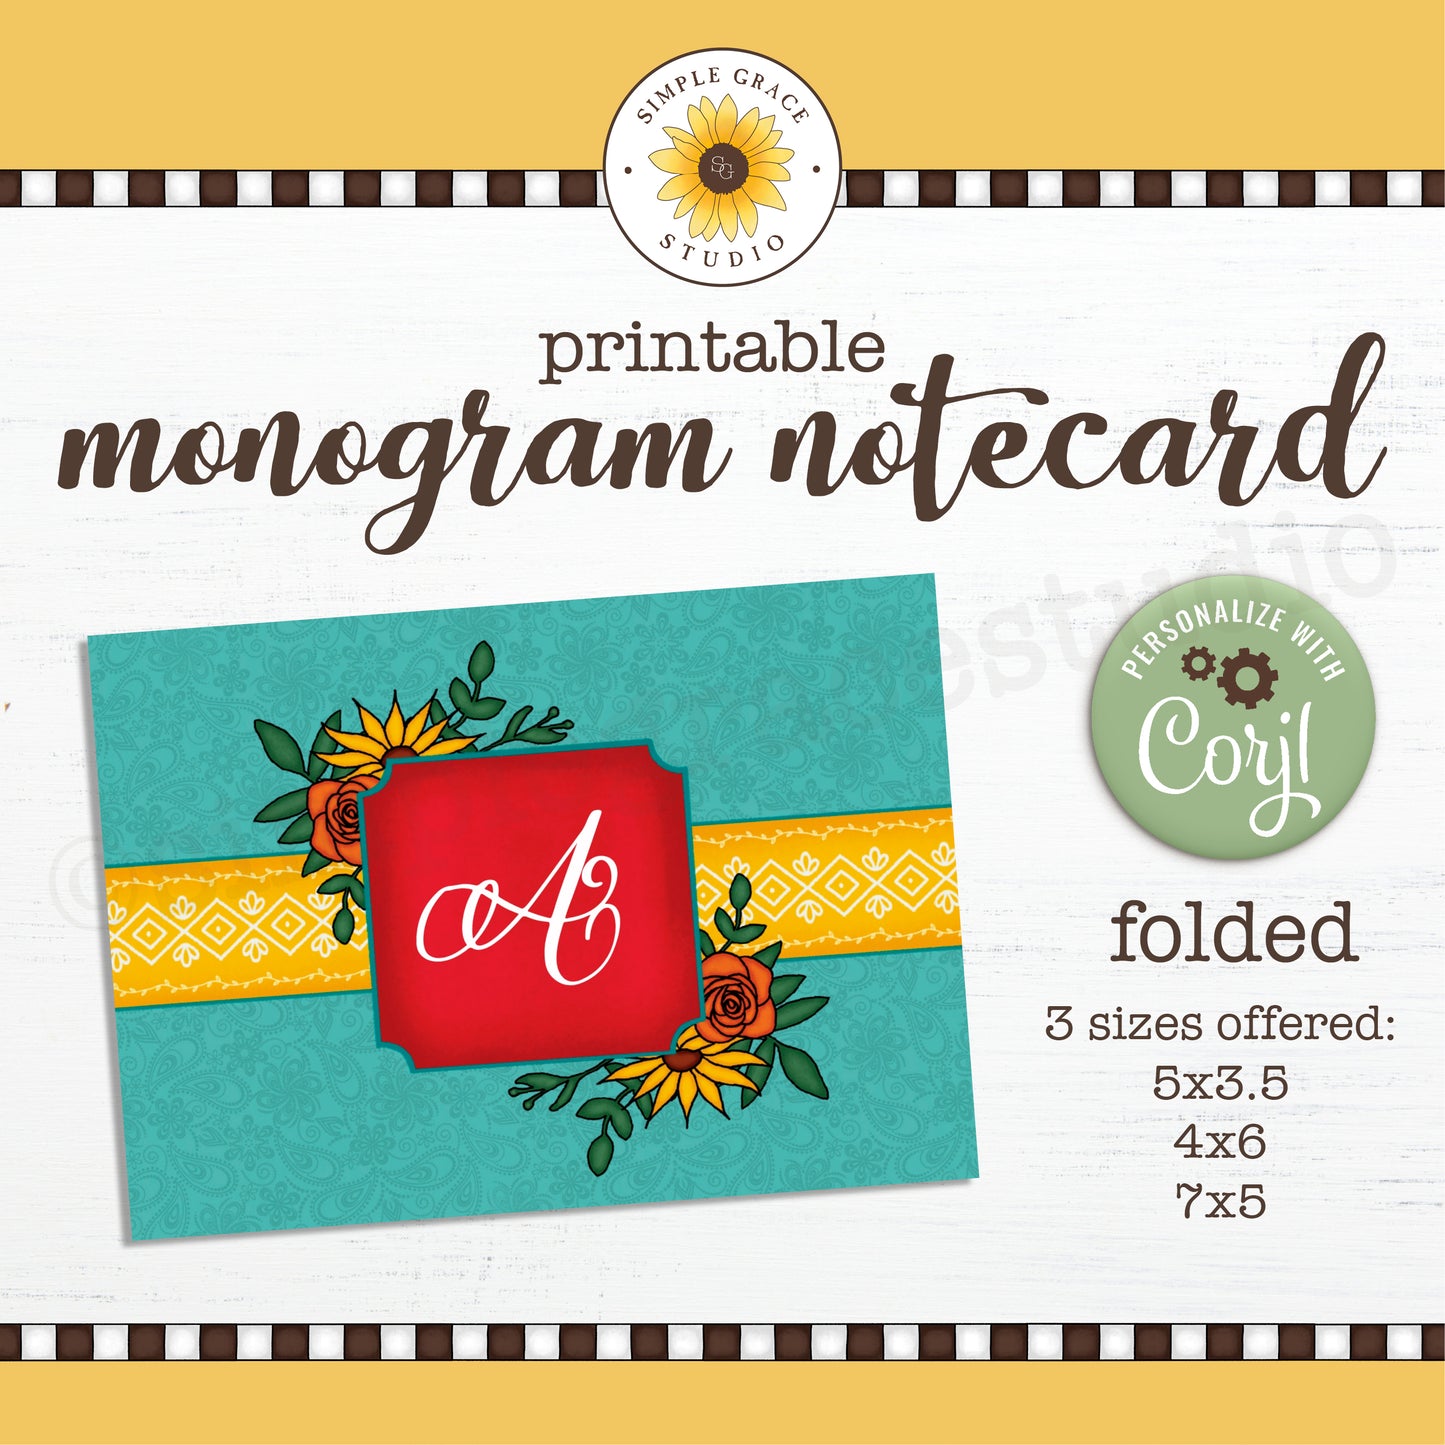 Folded Monogram Notecard - Teal